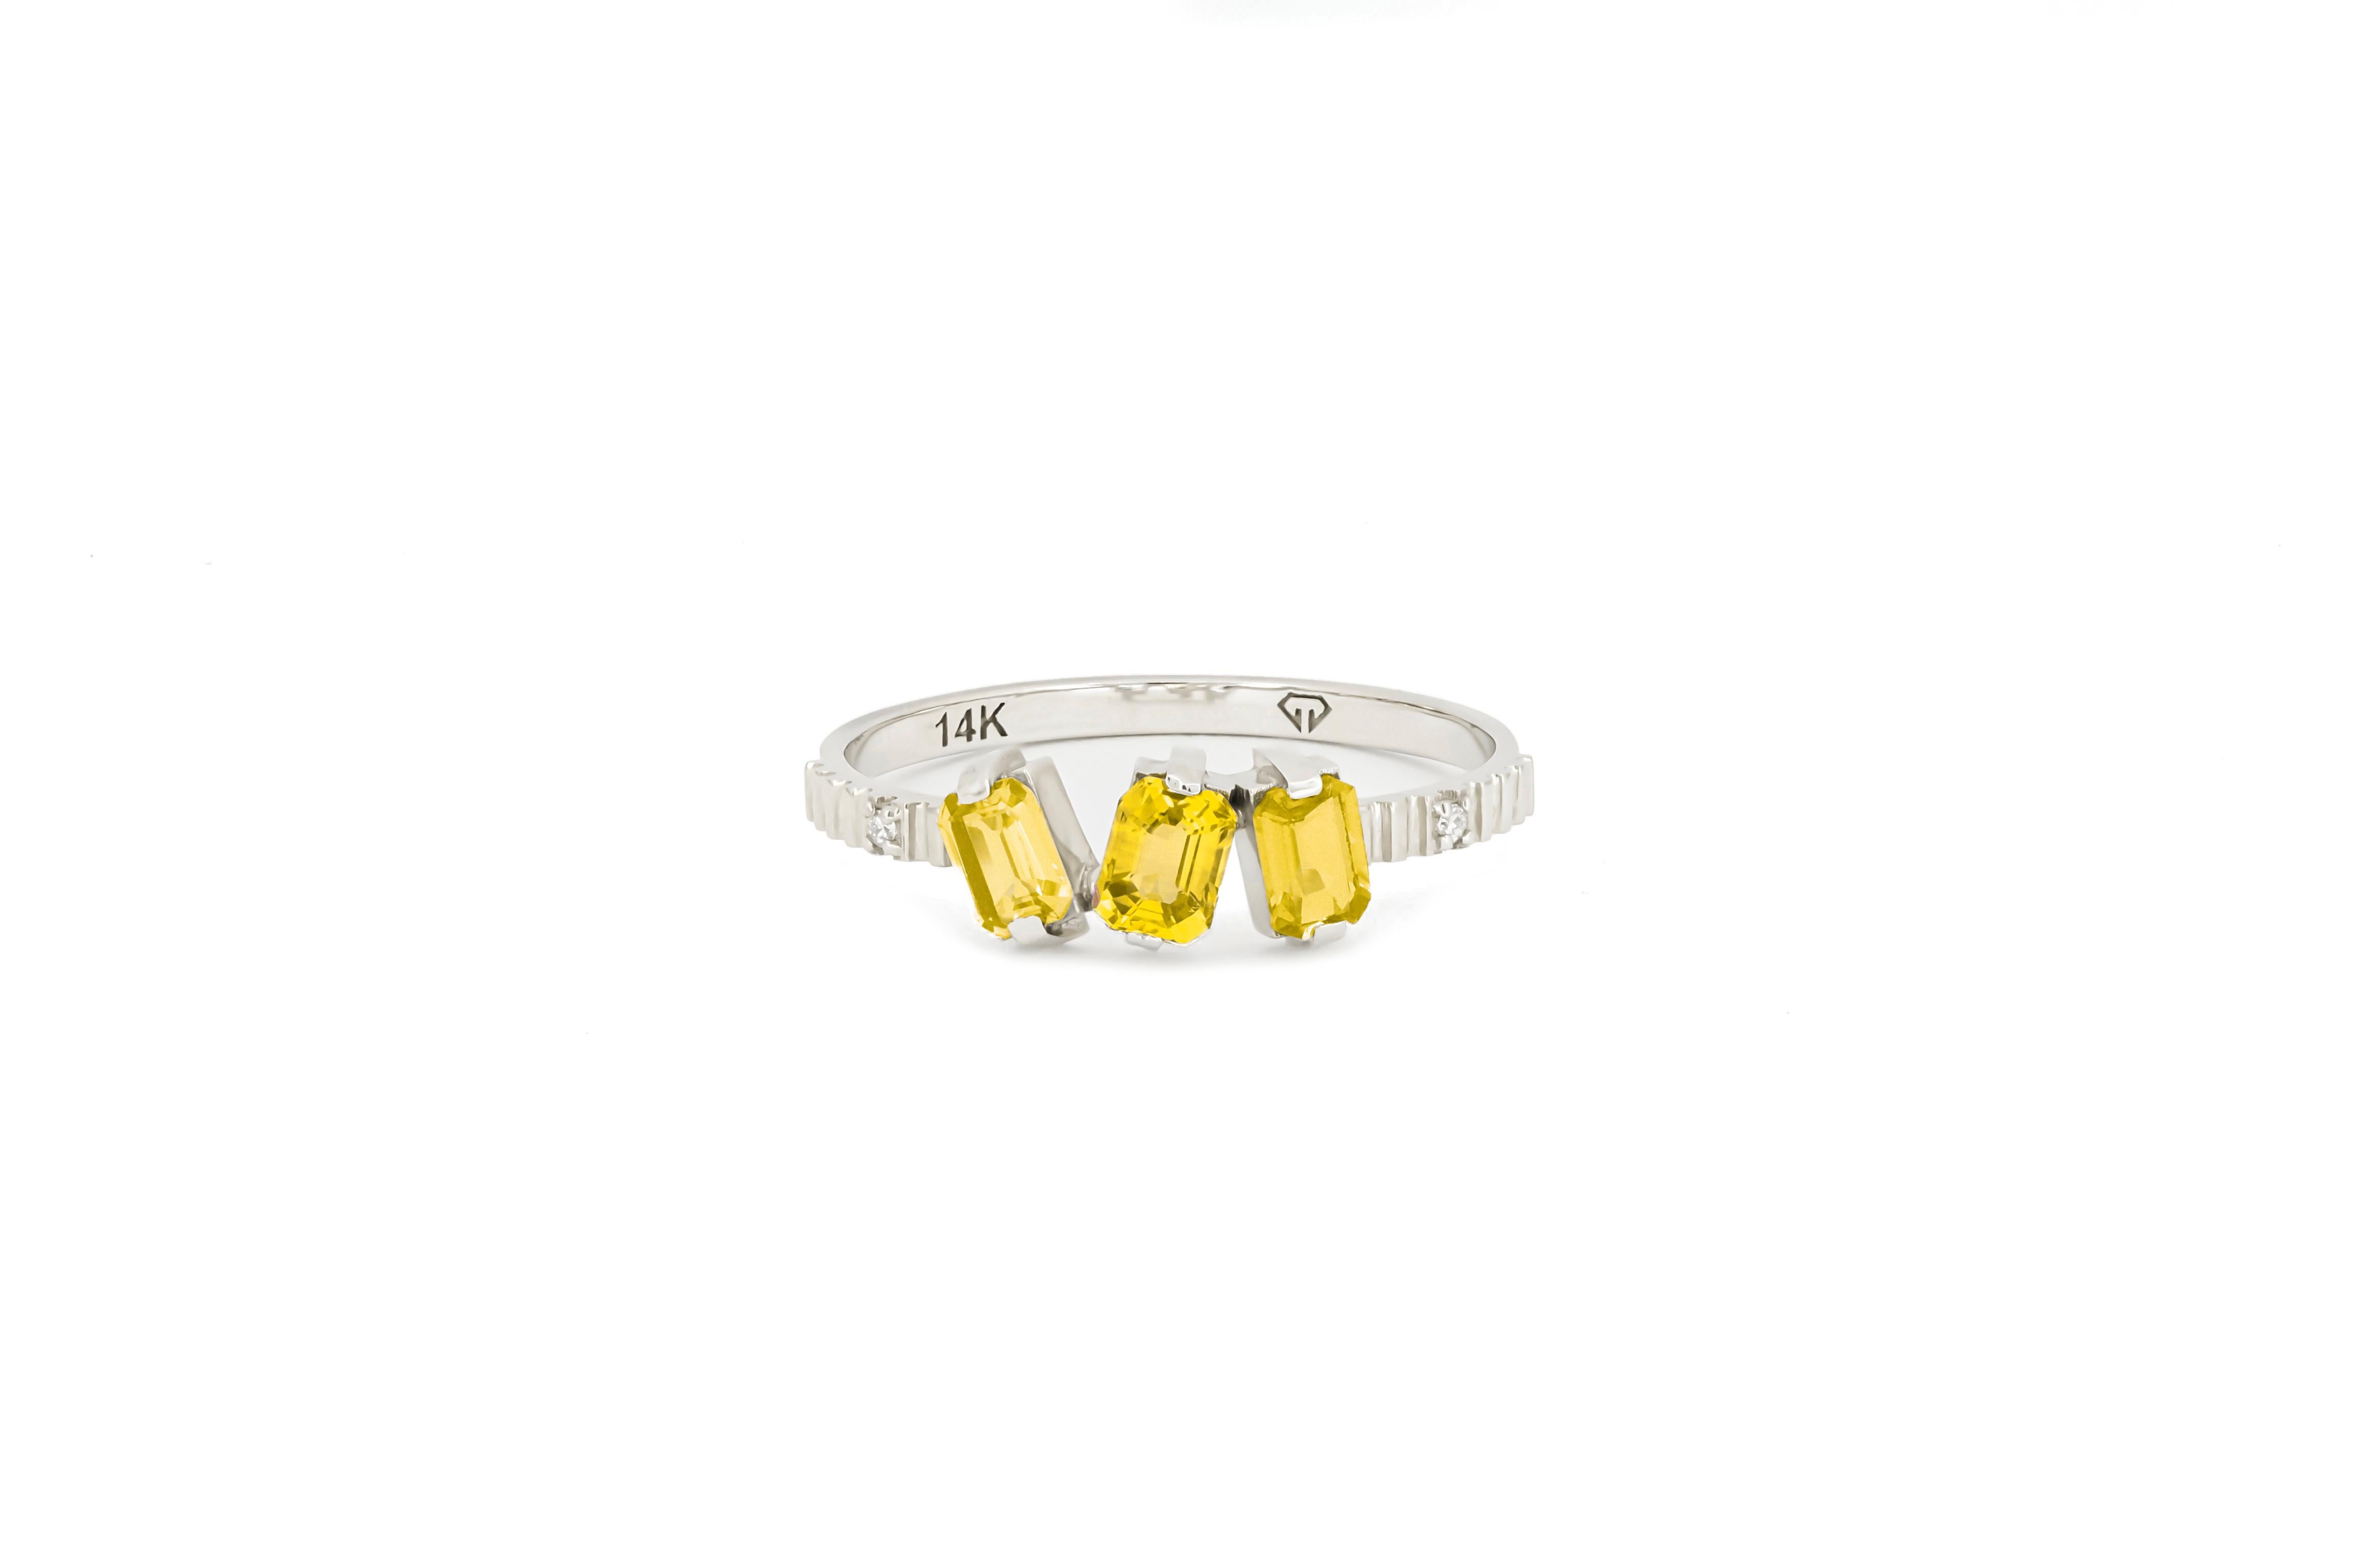 For Sale:  Monochrome yellow gemstone 14k ring. 2